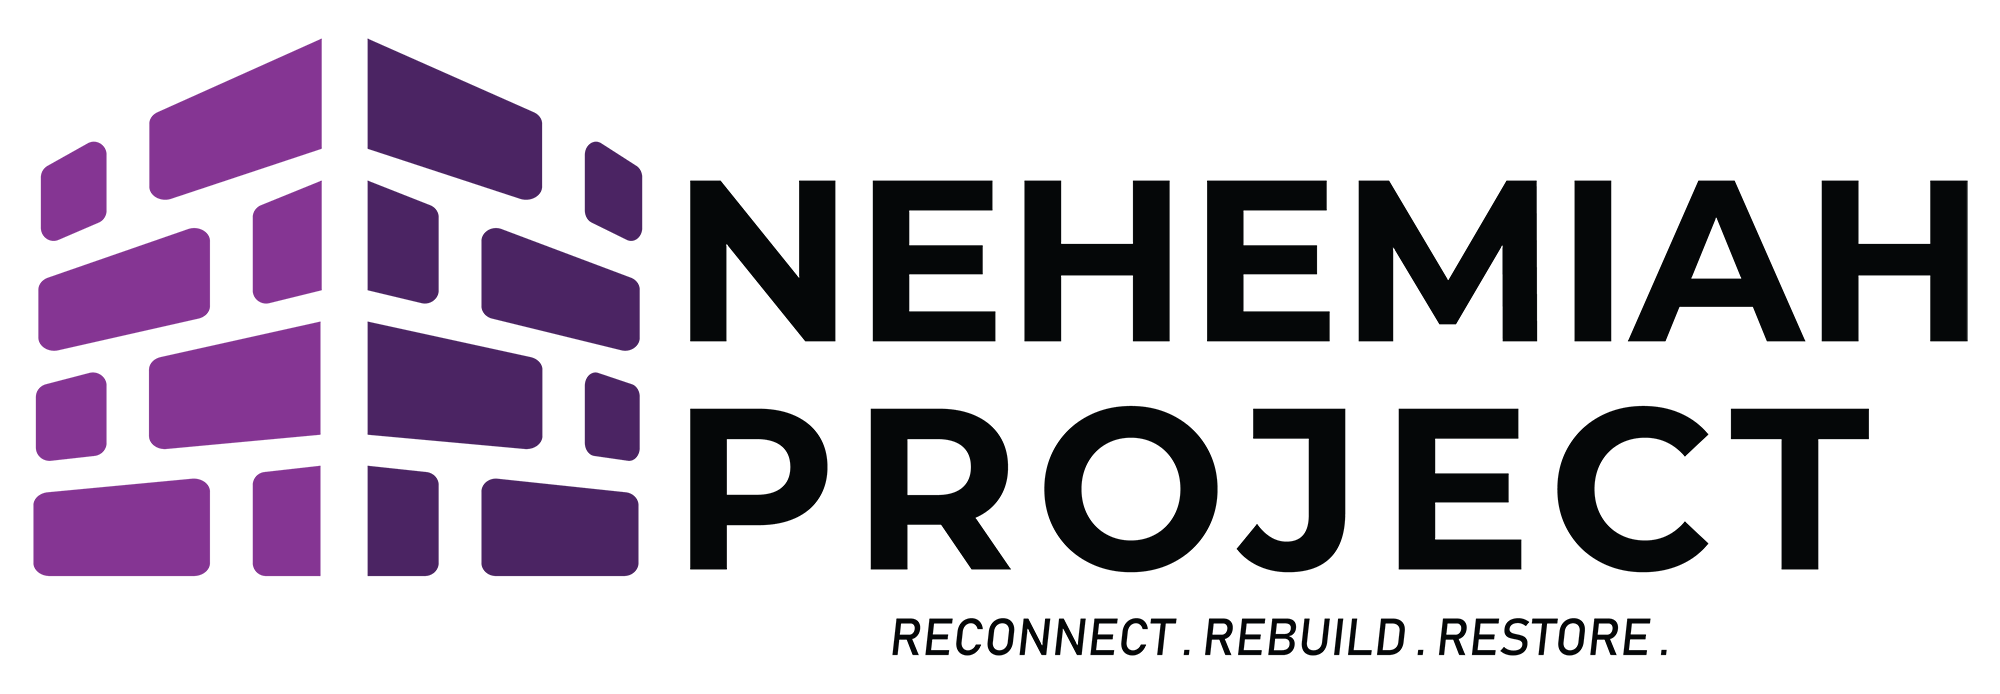 Nehemiah Project of Love